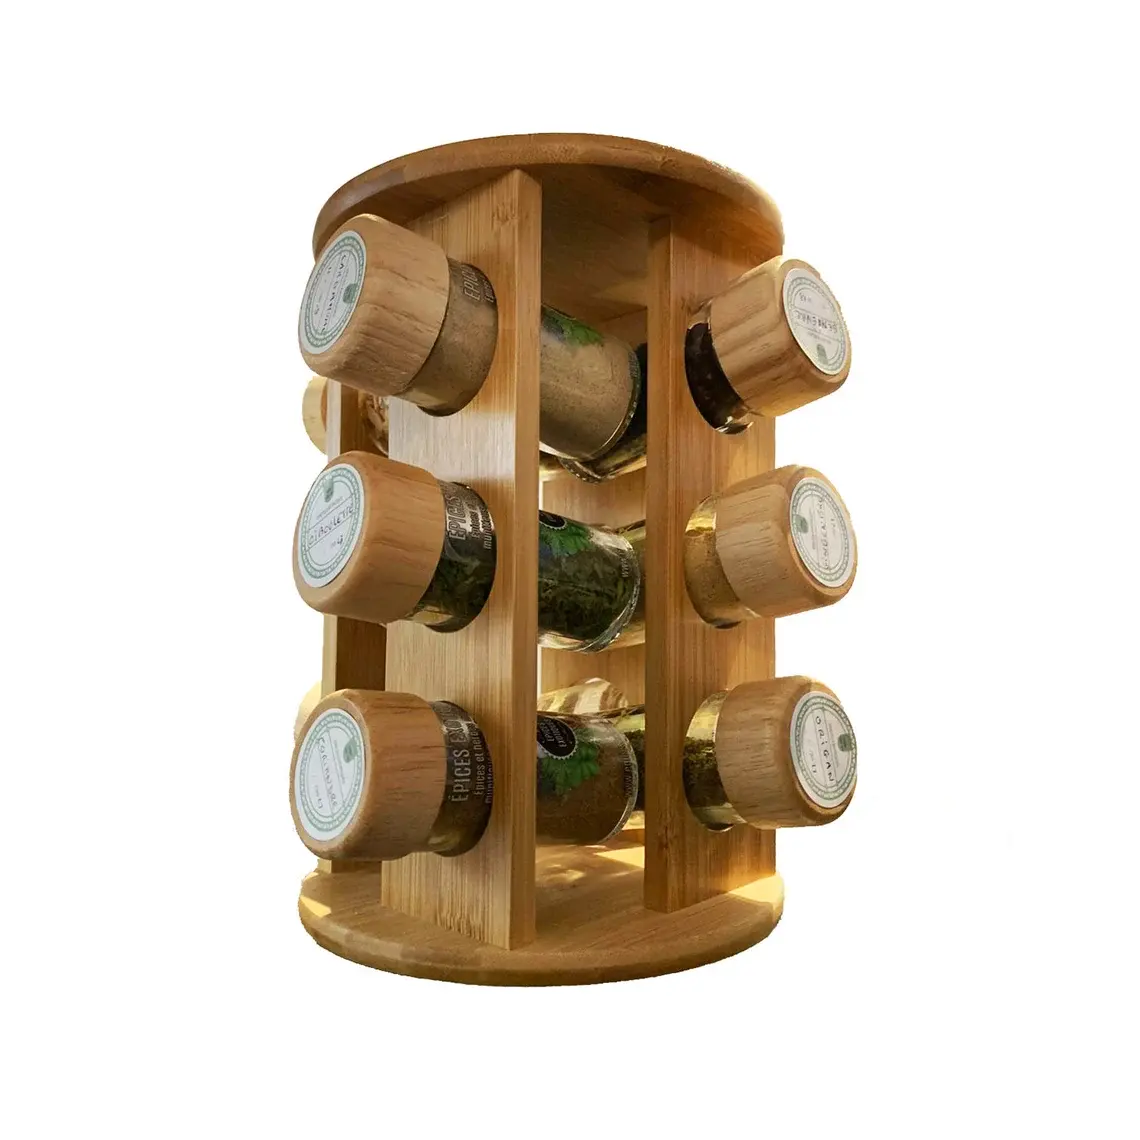 LONGYAN WANGHONG Custom Kitchen Revolving shelf bamboo bamboo rotating spices rack 12 jars Gift idea